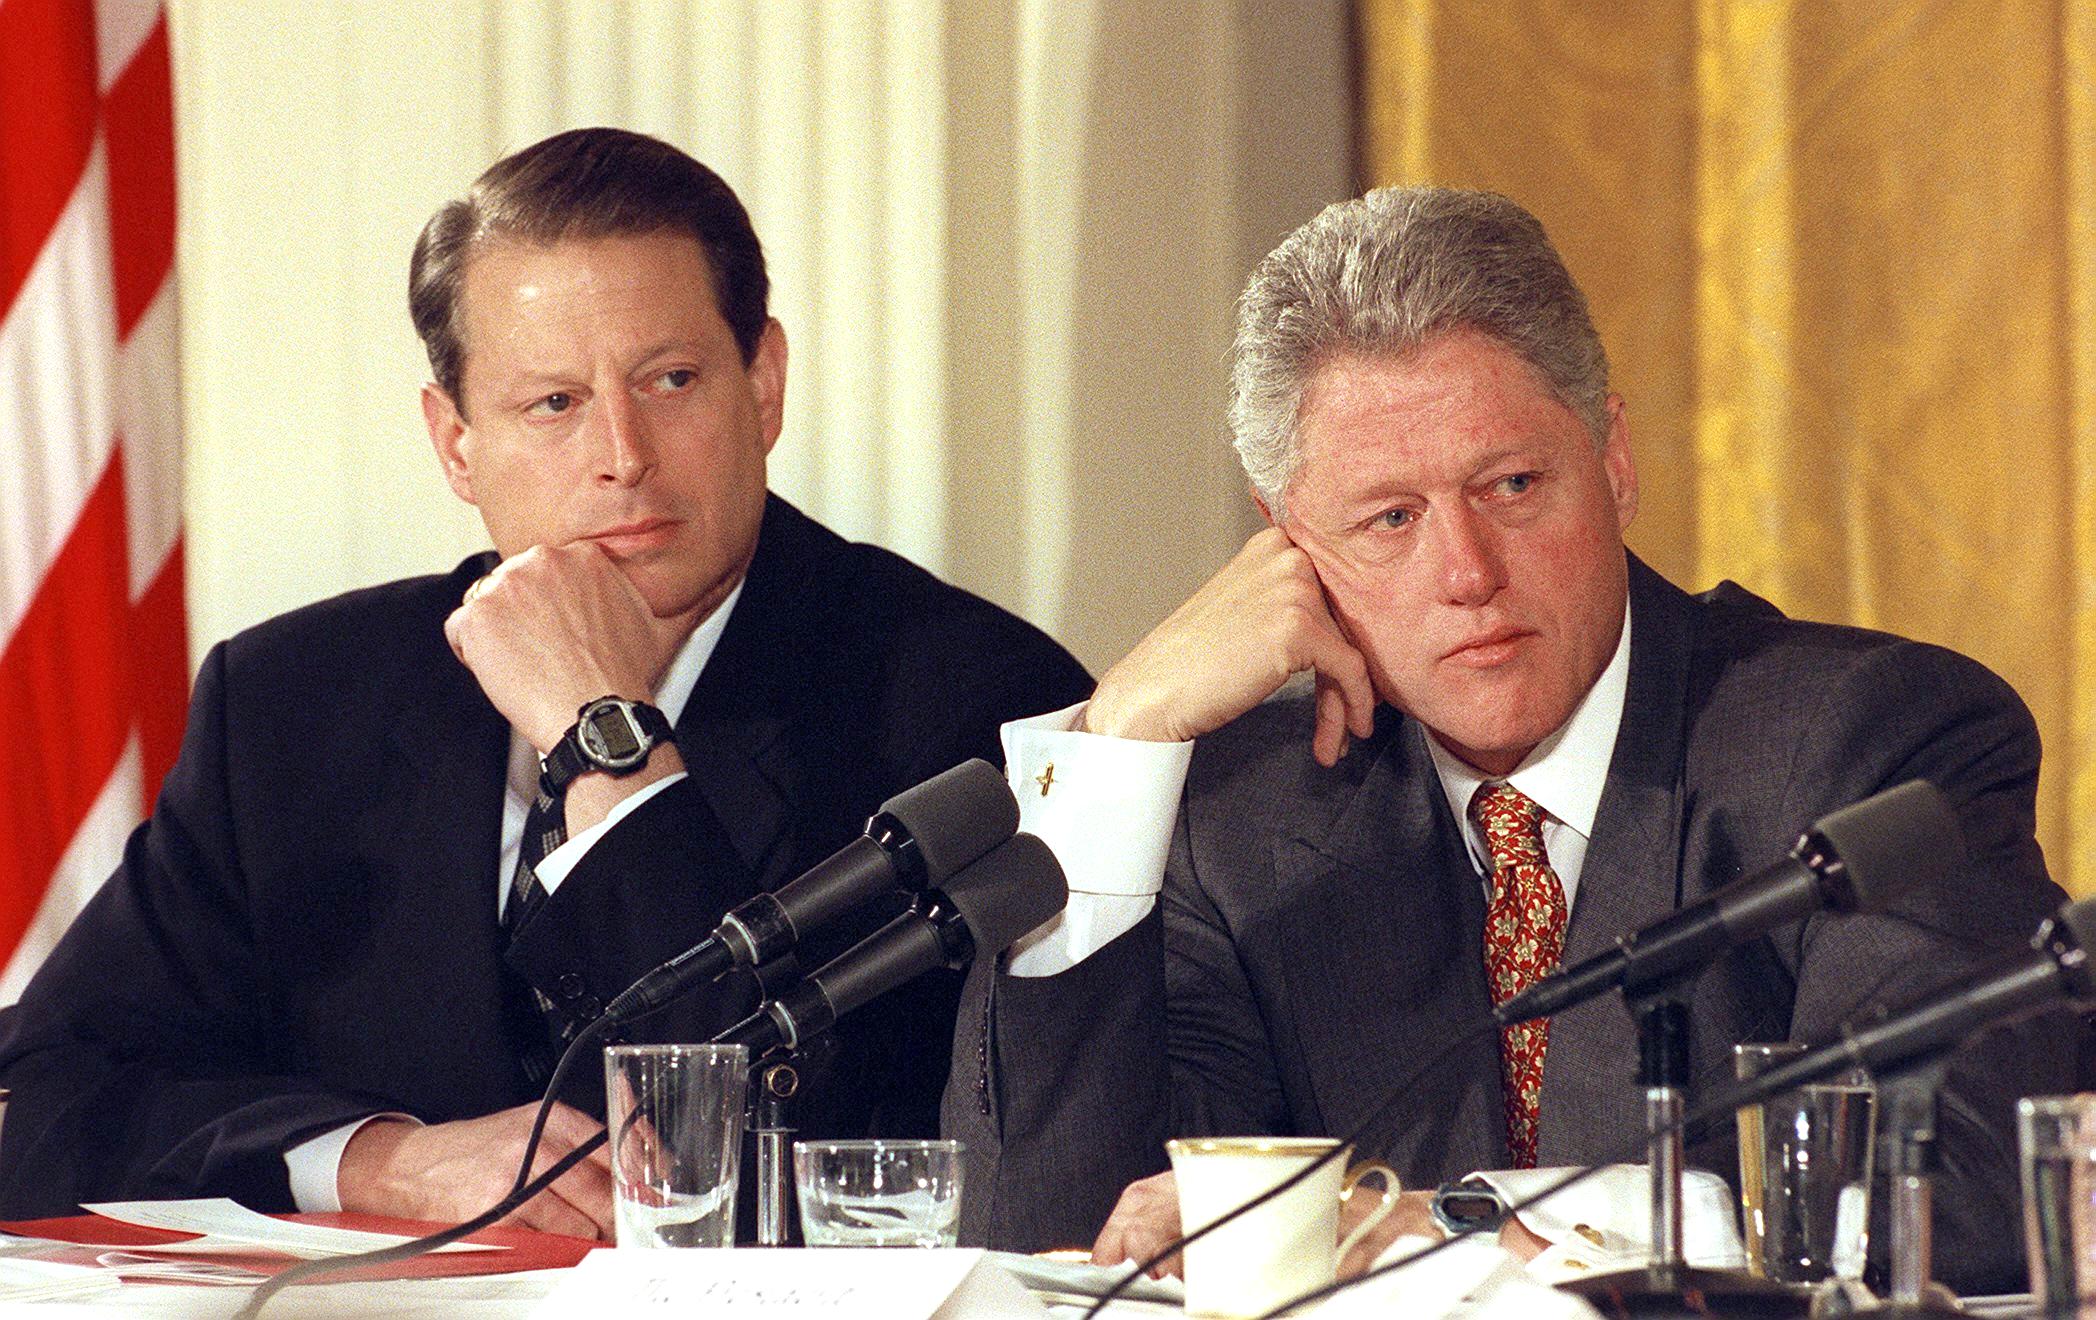 US President Bill Clinton and Vice President Al Gore